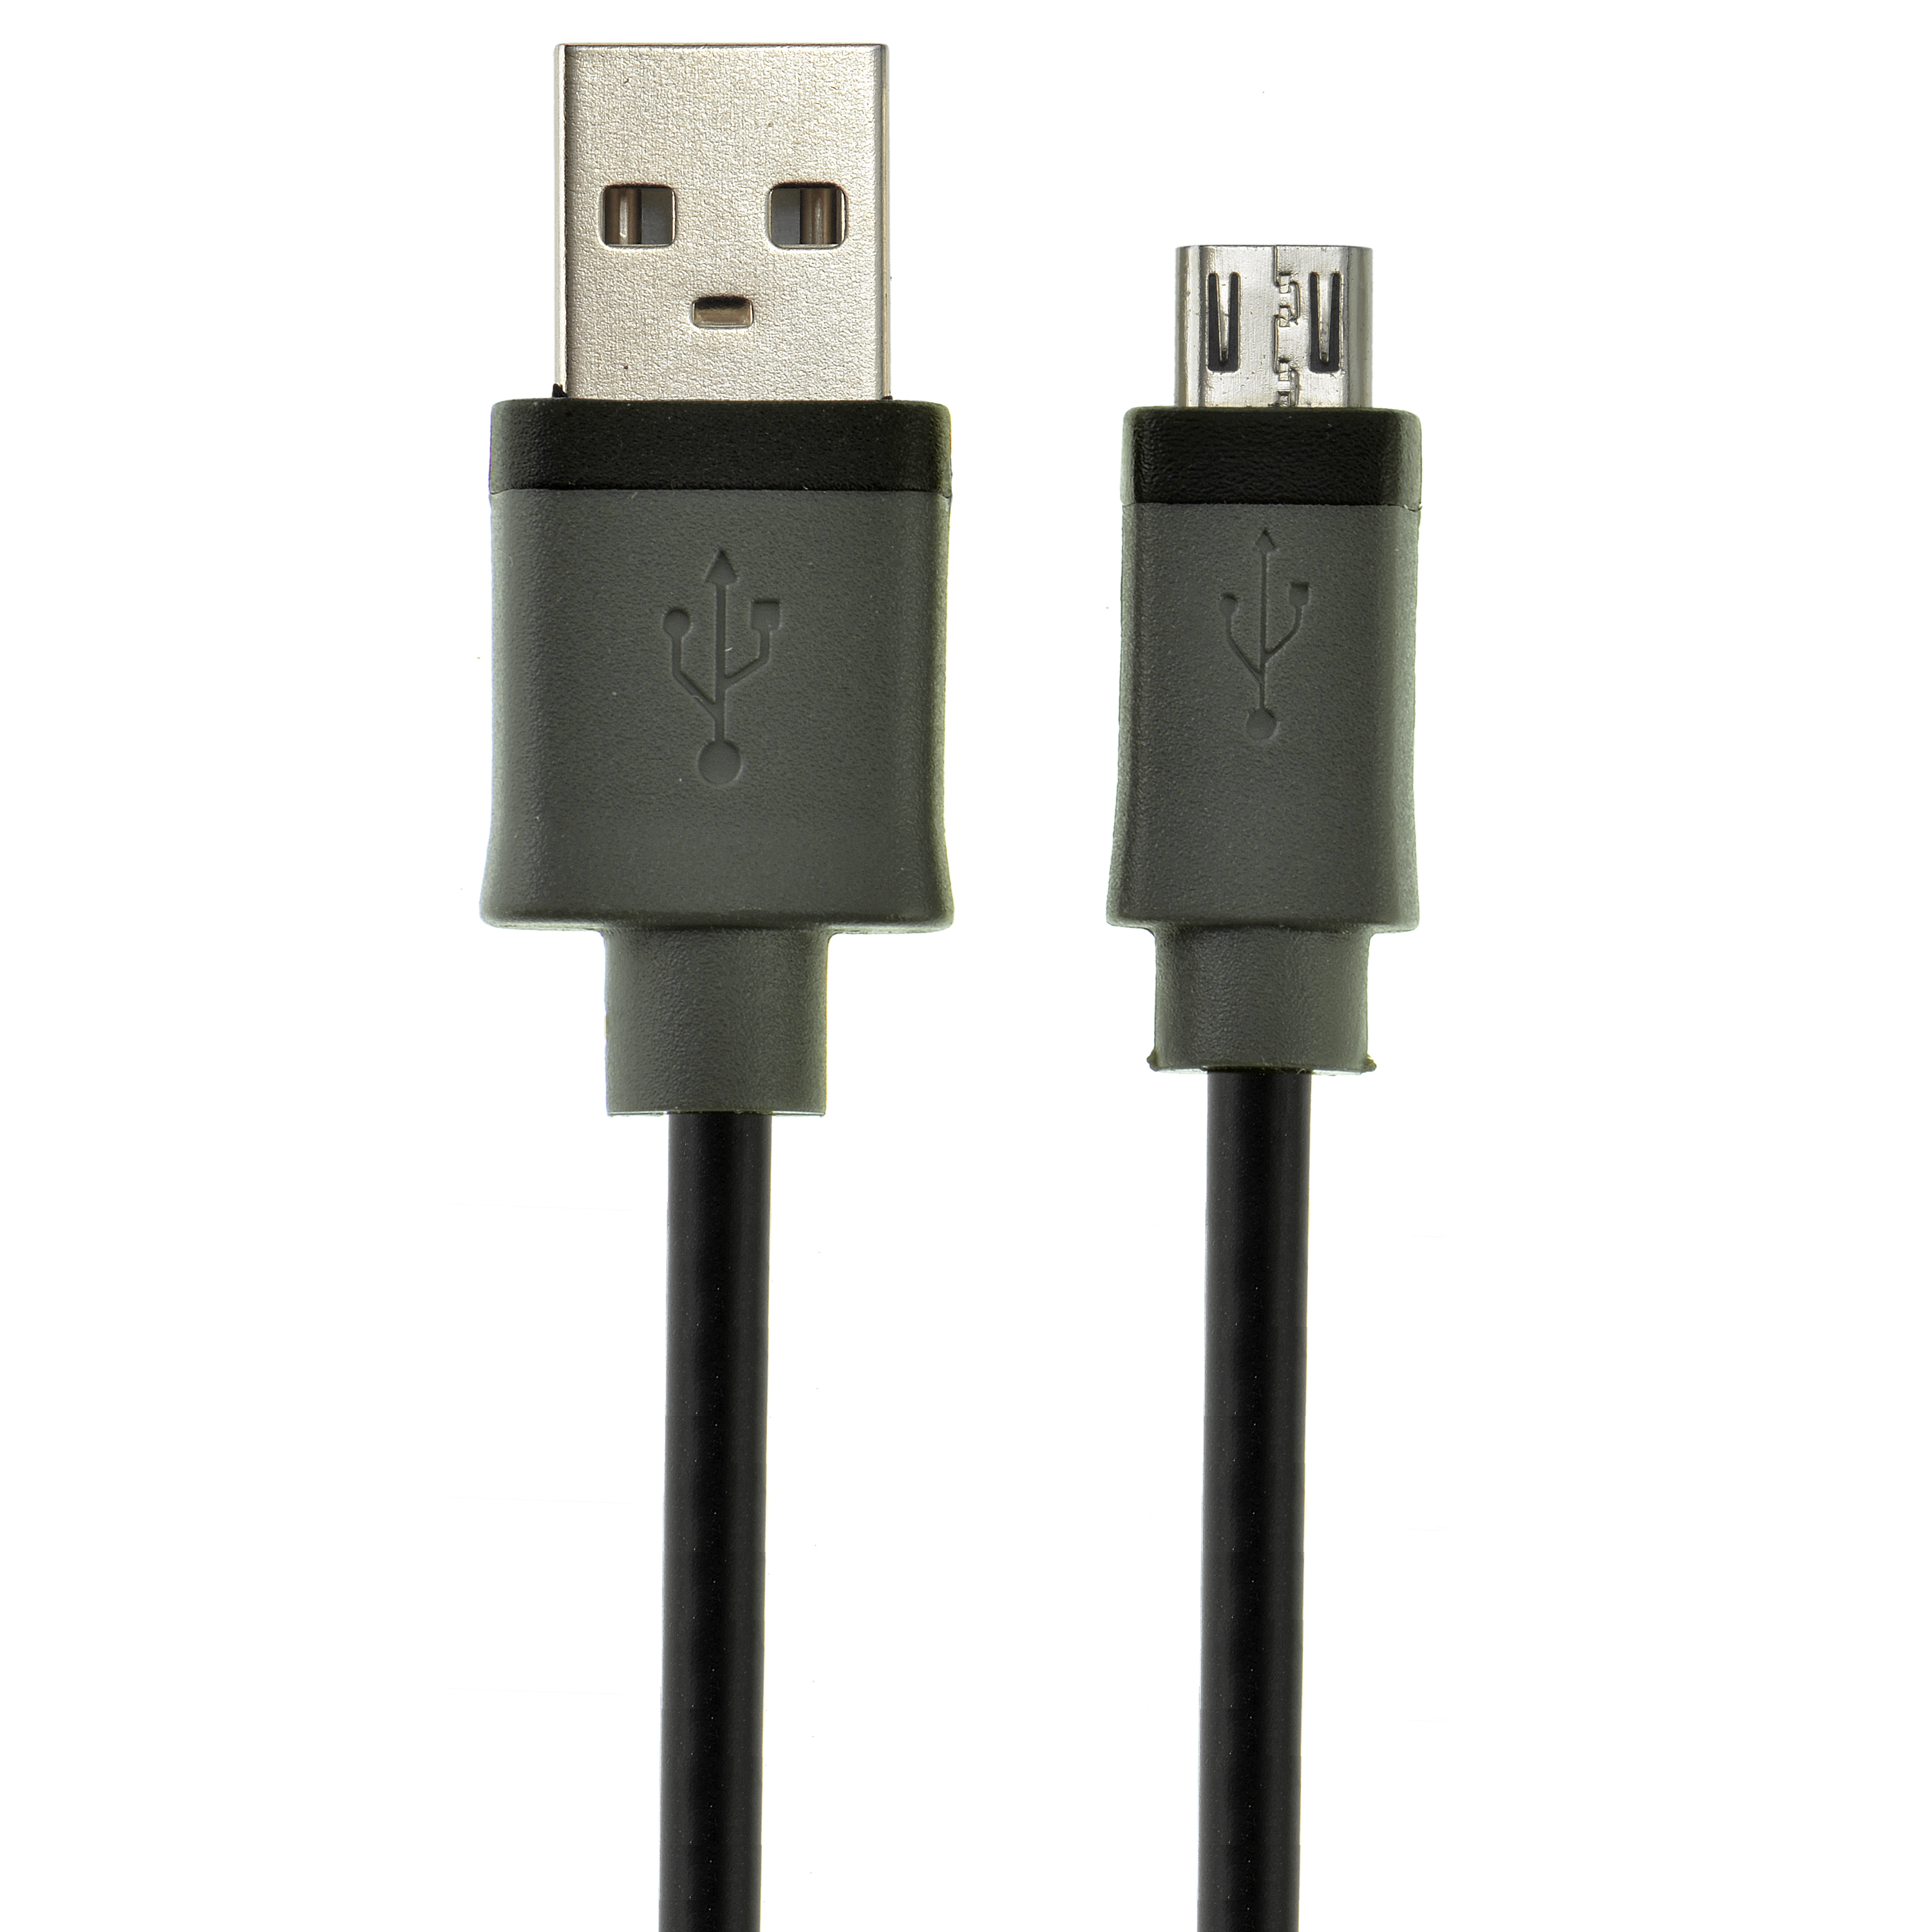 Voorwaarde Roos werk Shop New USB 2.0 - Micro-USB to USB Cable - High-Speed A Male to Micro B  (10 Feet) | Mediabridge Products